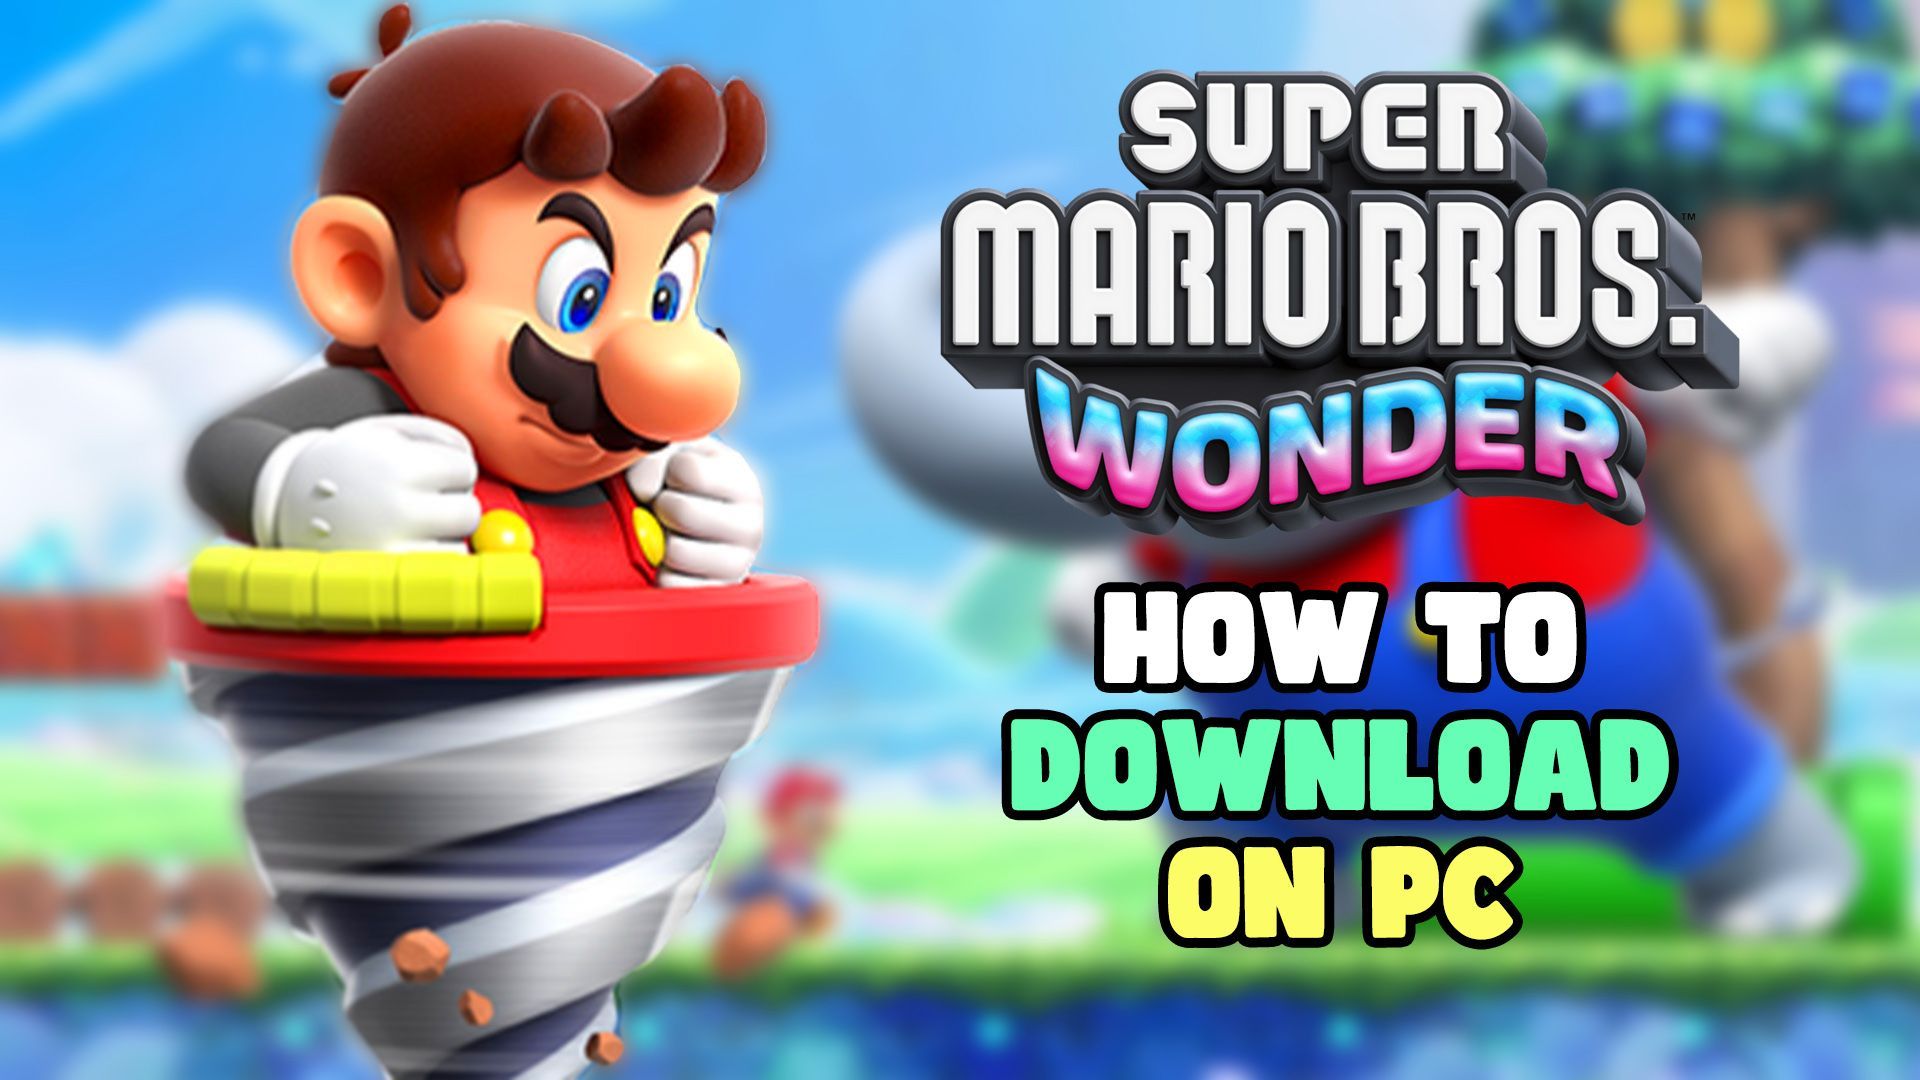 How To Download Super Mario Bros. Wonder On PC - BiliBili